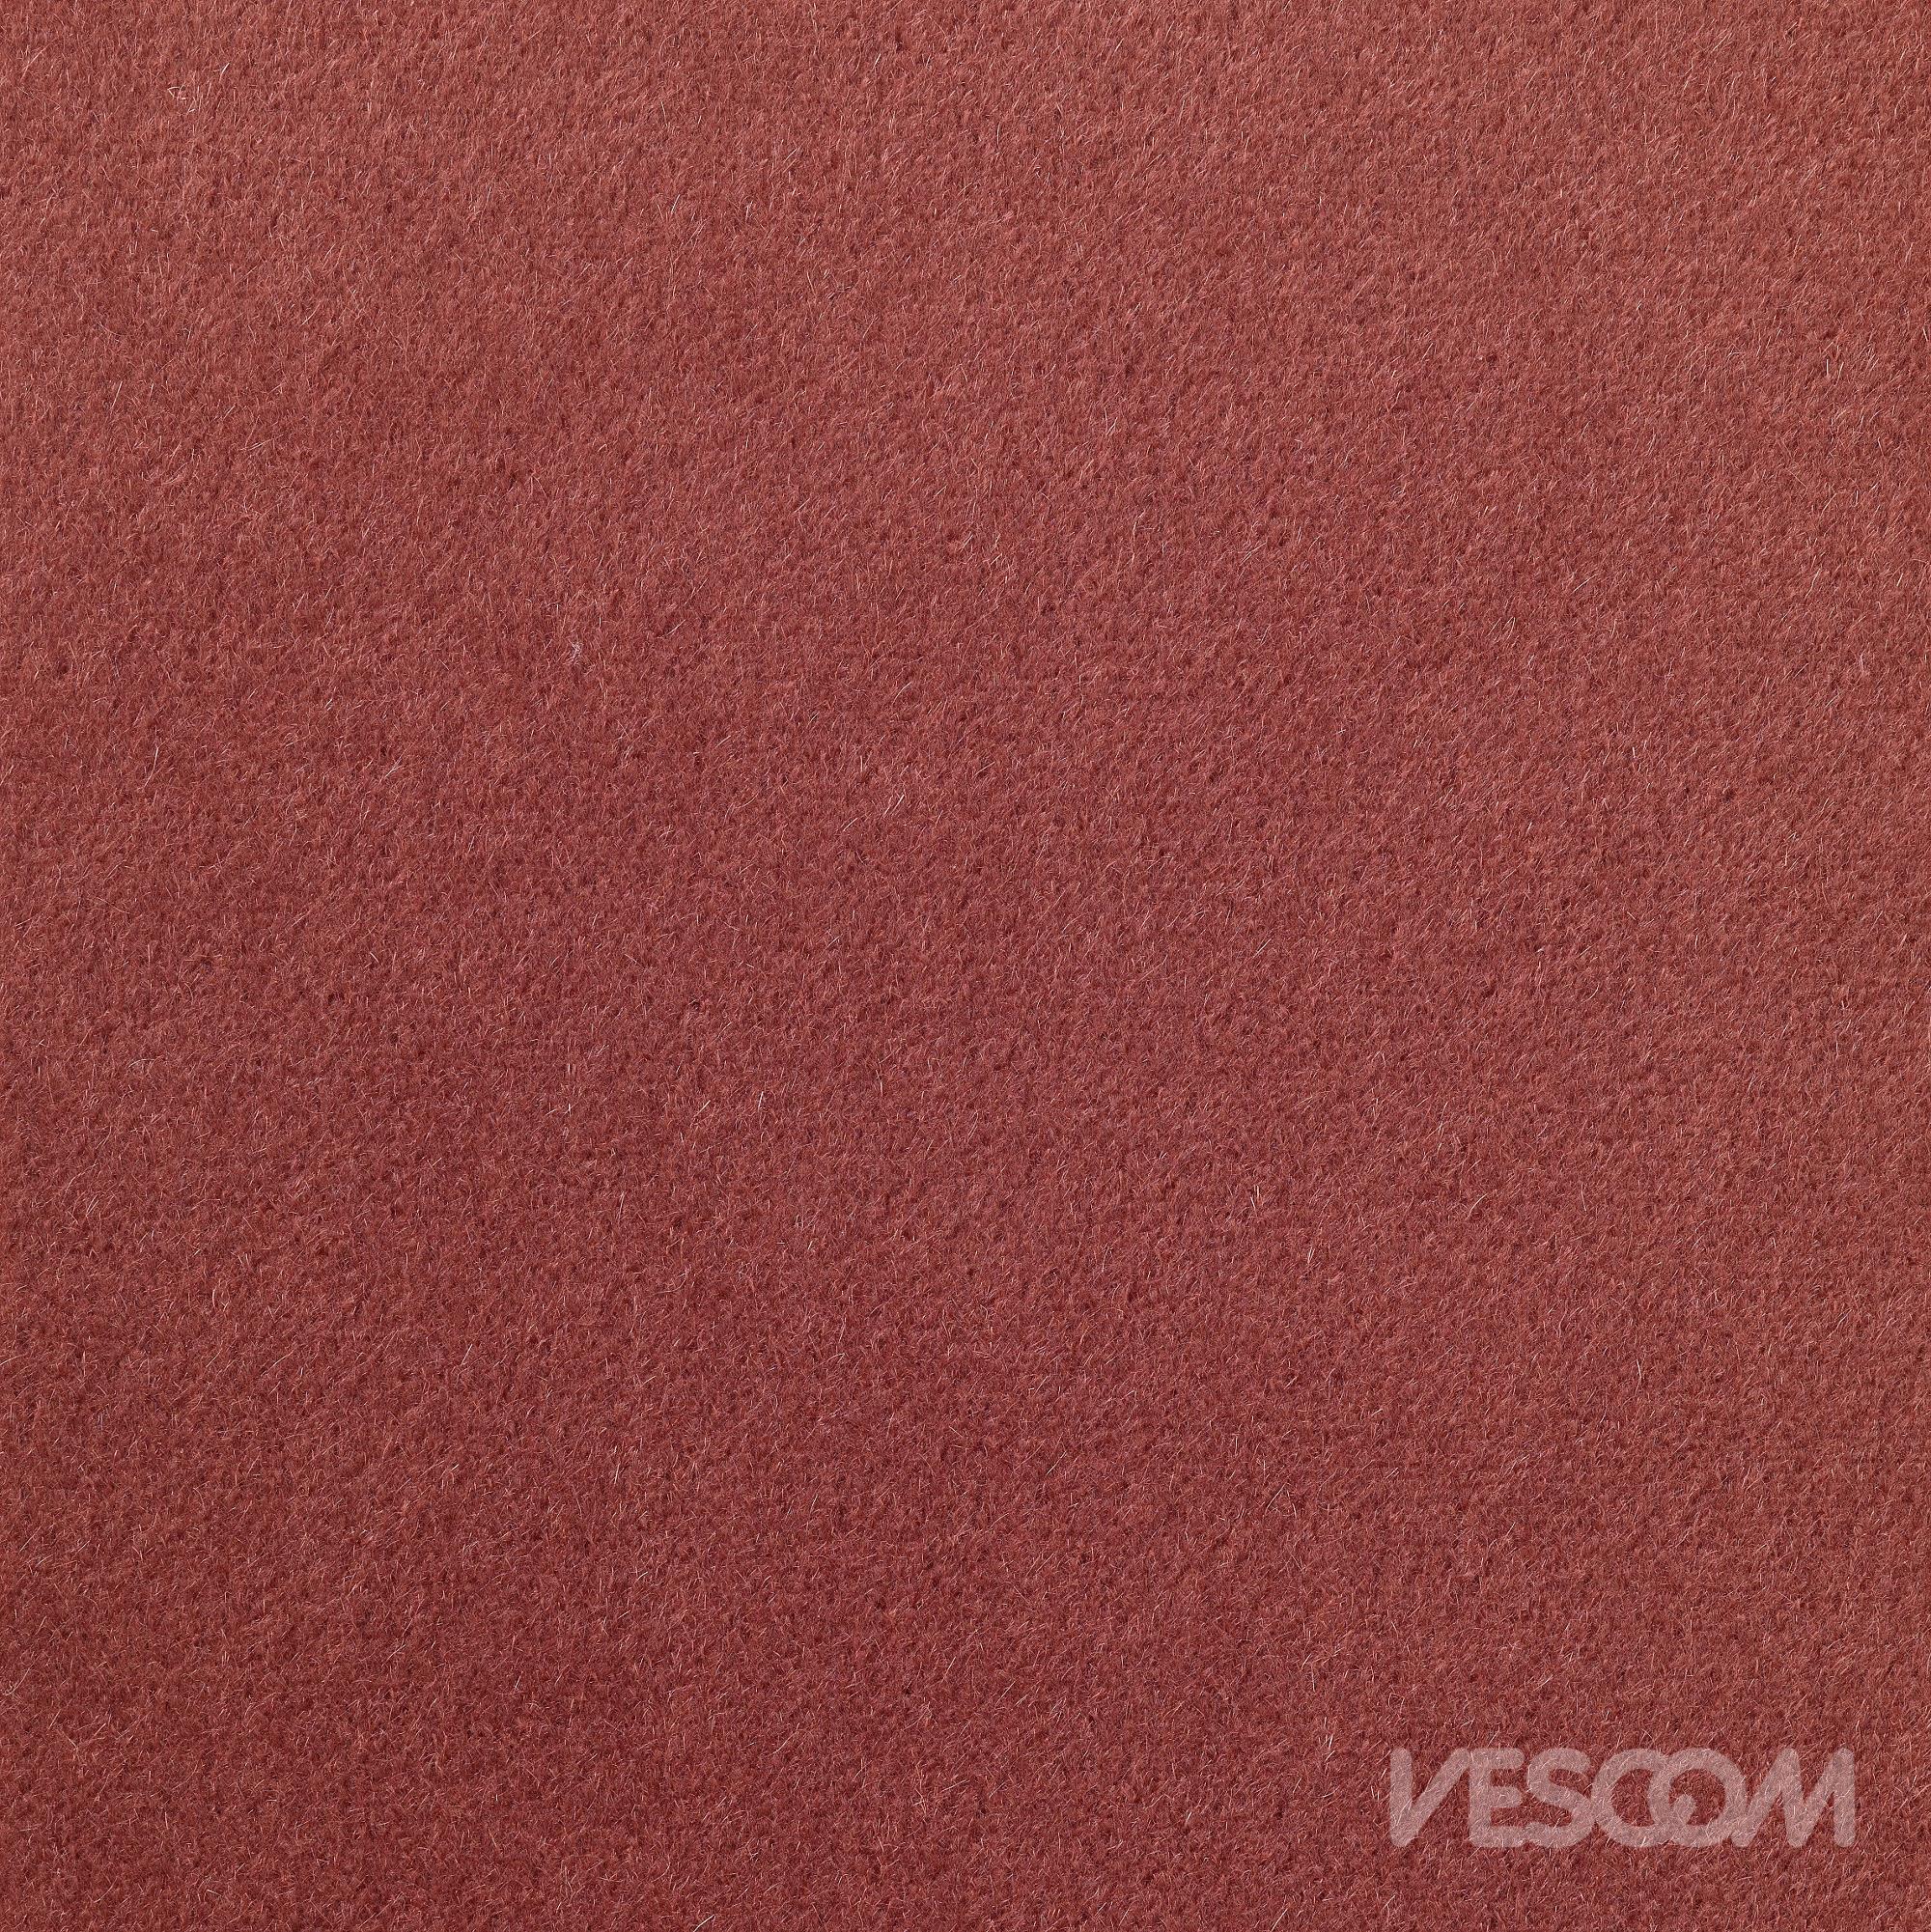 Vescom Ariana Upholstery Fabric 7061.35